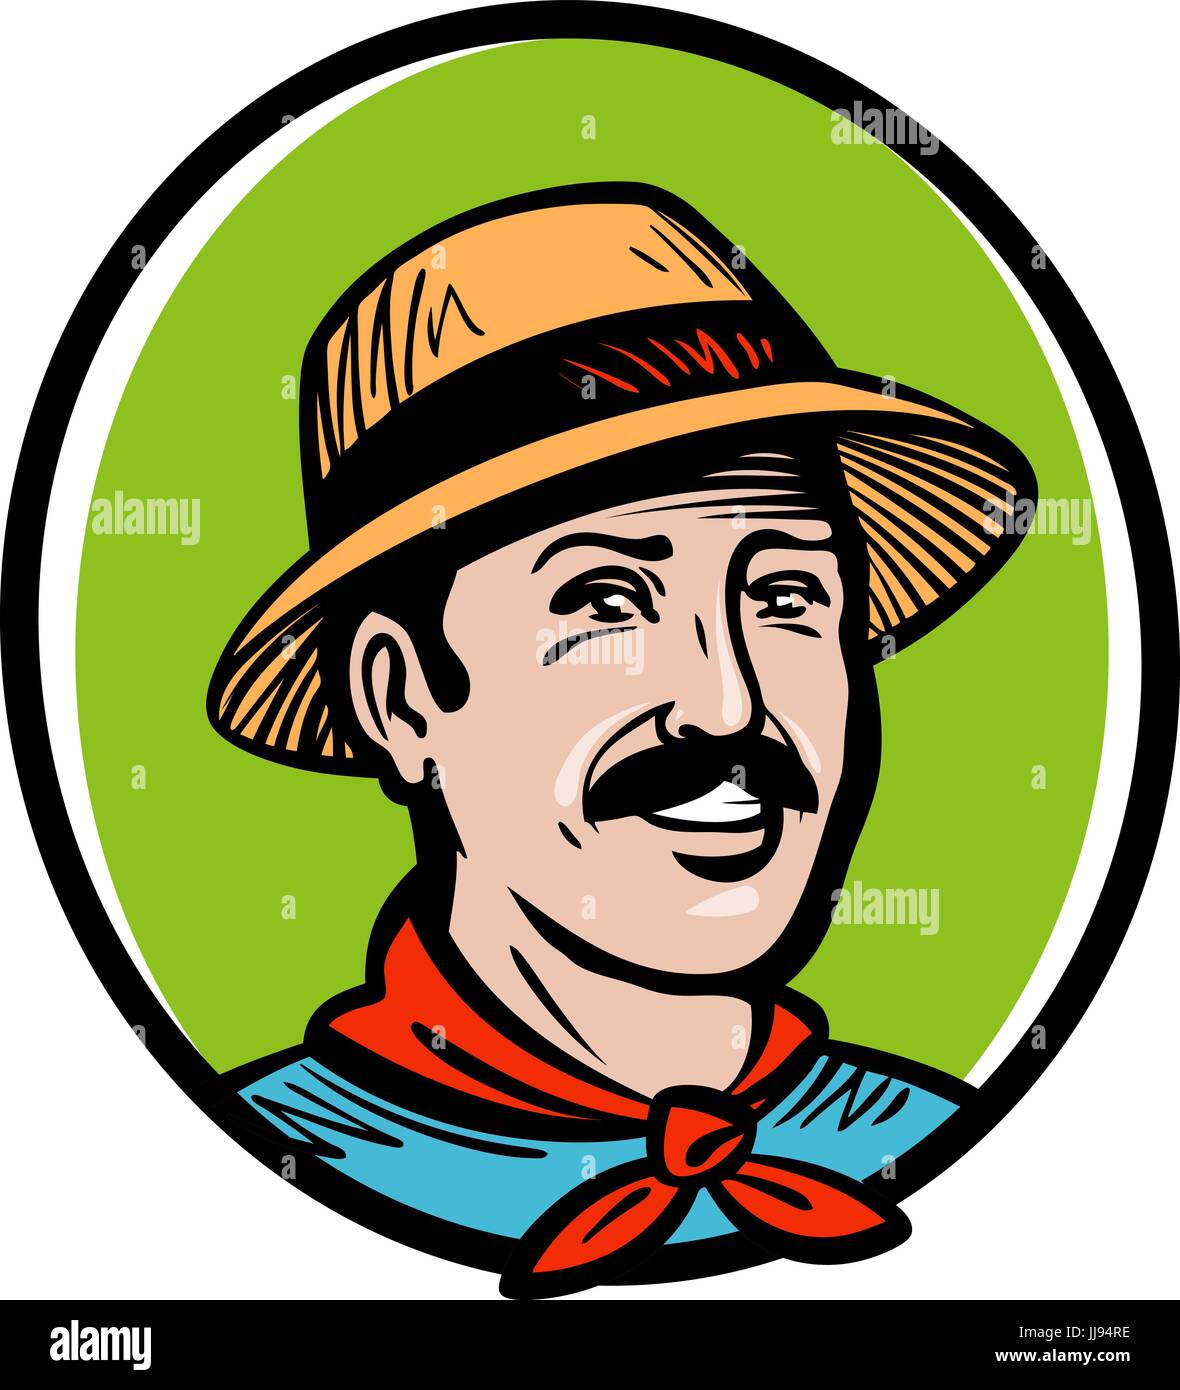 Farmer, gardener logo. Farm product, farming, gardening, horticulture, agriculture label or icon. Cartoon vector illustration Stock Vector